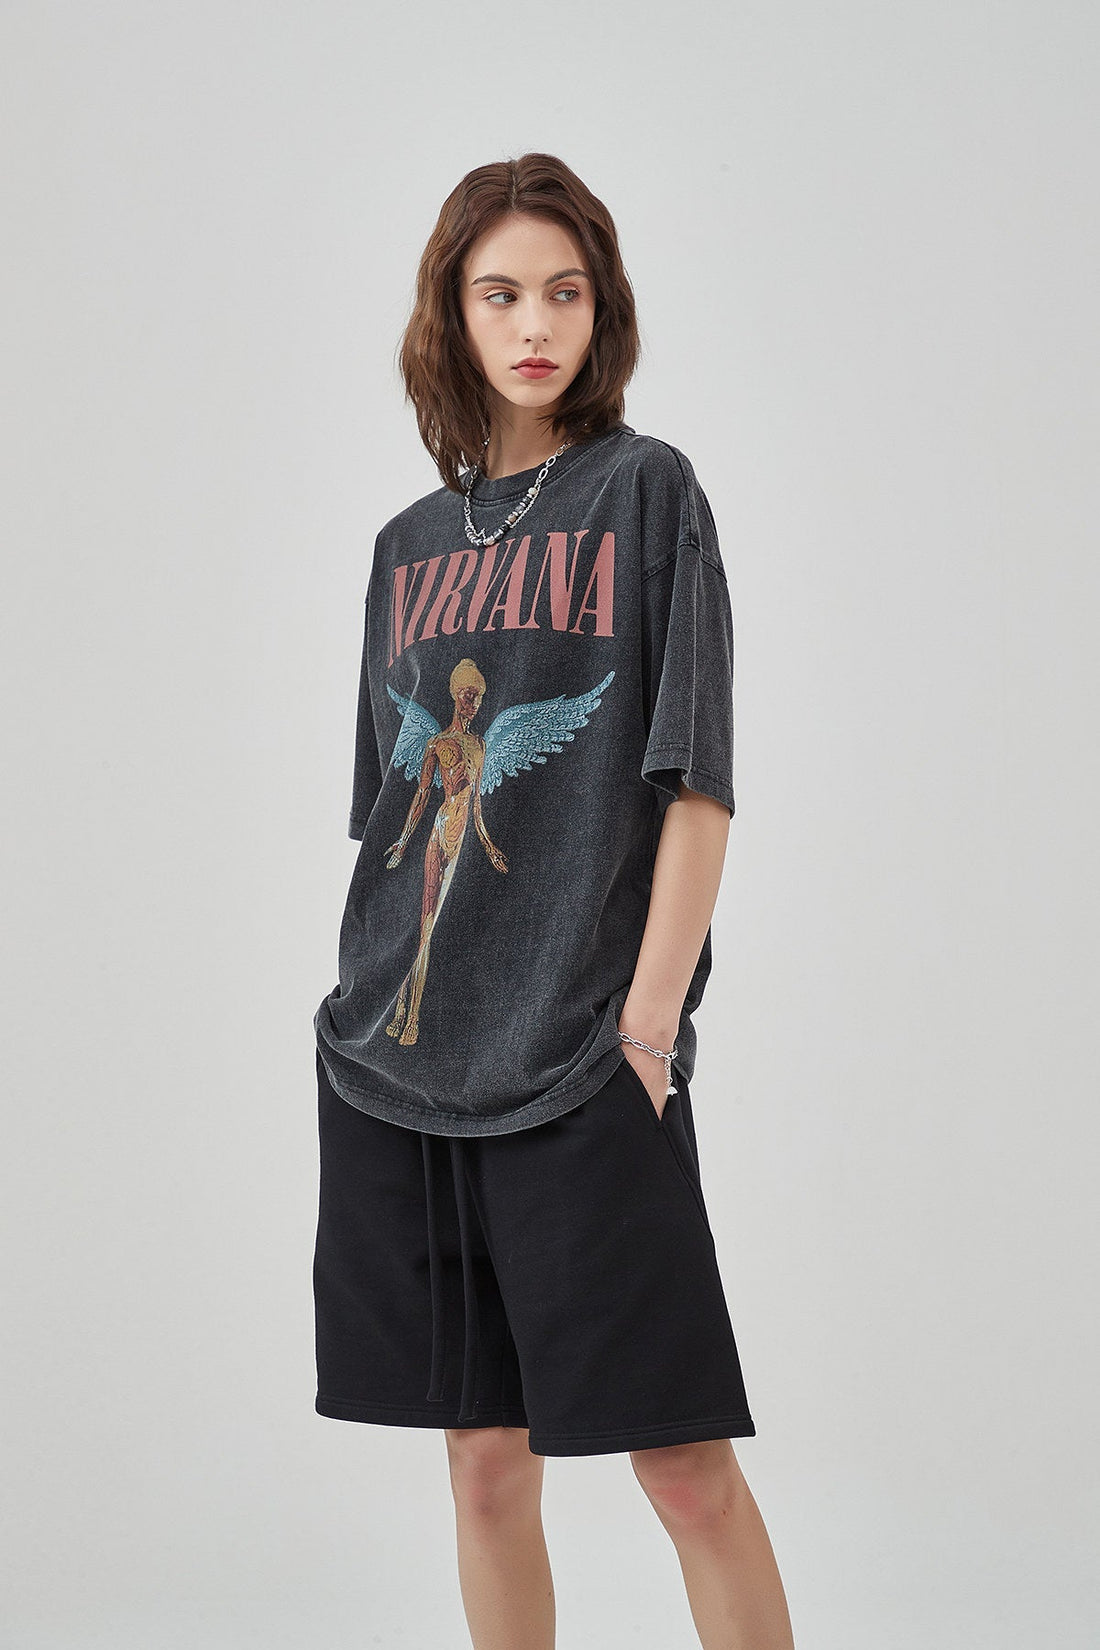 Nirvana Band Print Women T-Shirt